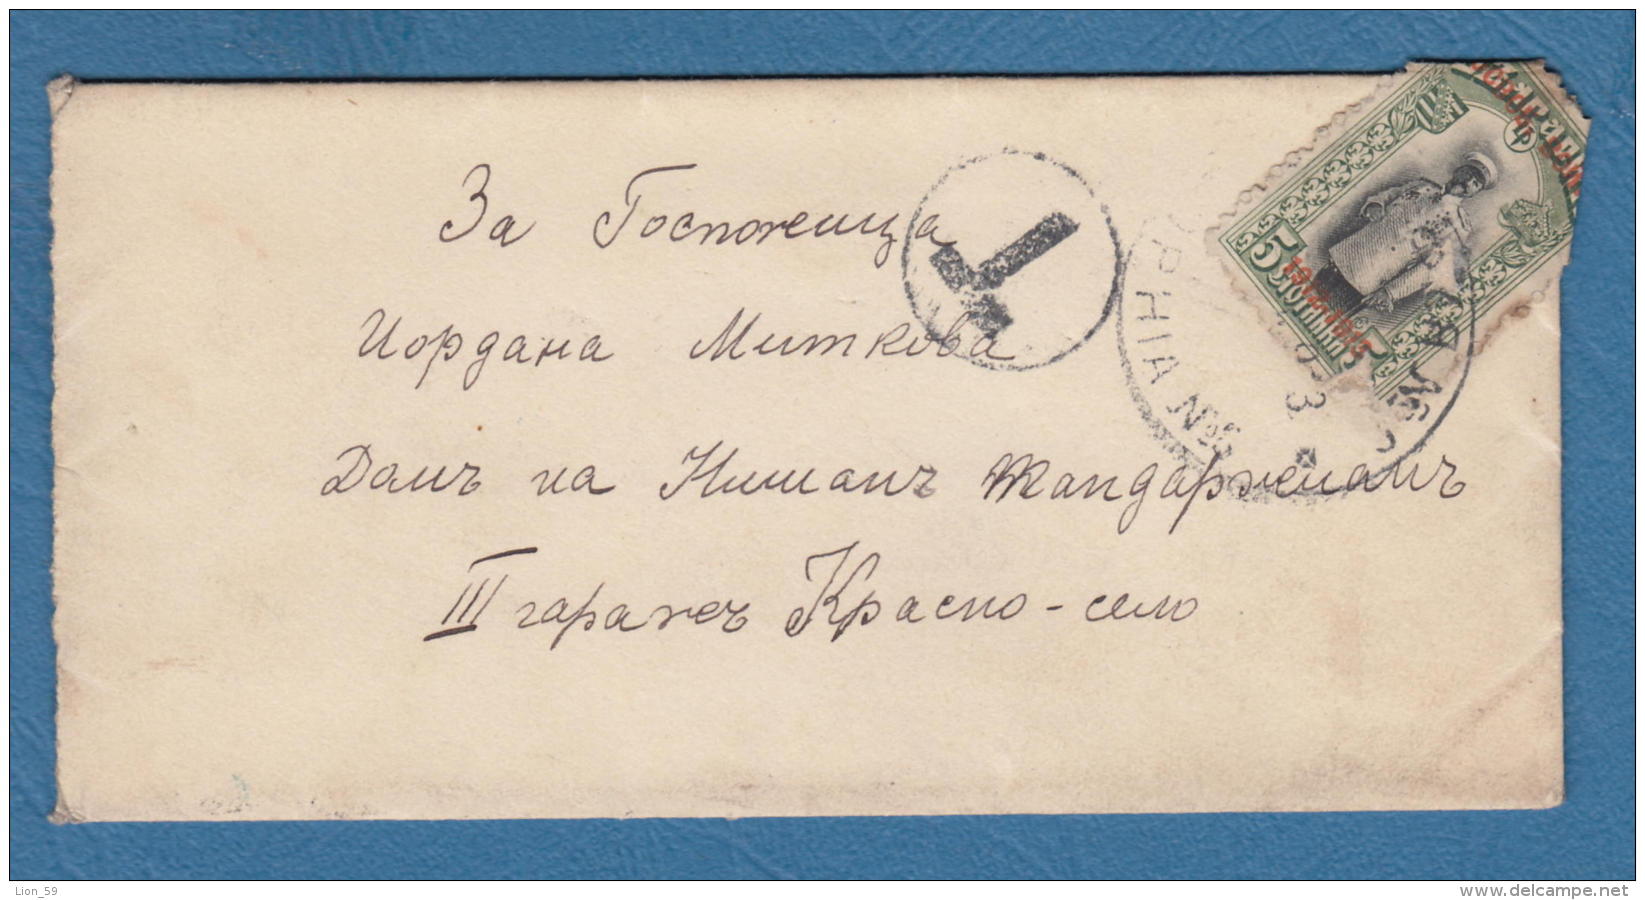 212533 / 1913 - 5 St. KING FERDINAND I Overprint " Liberation War ", SOFIA POSTAGE DUE - KRASNO SELO Bulgaria Bulgarie - Portomarken